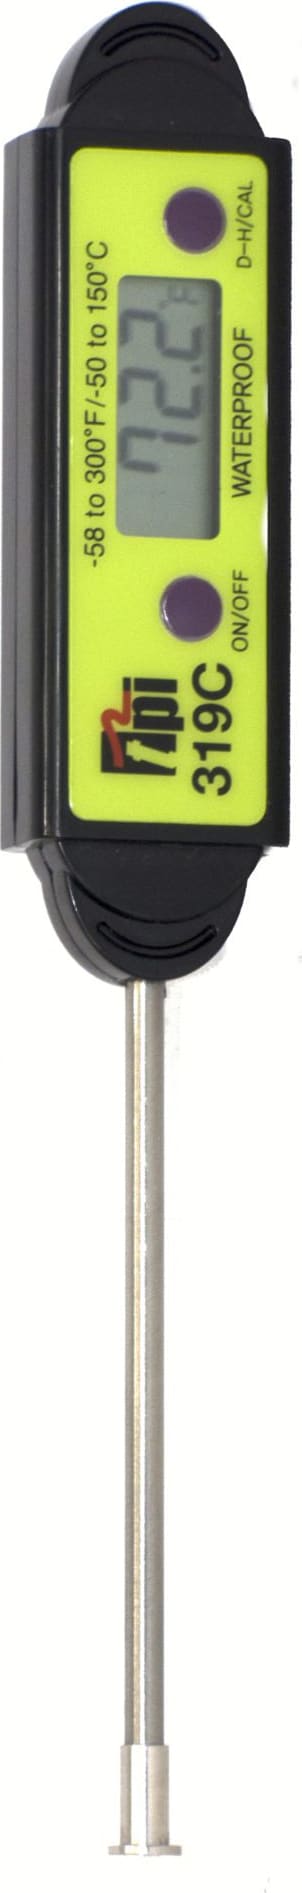 TPI 319C 315 Pocket Digital Thermometer